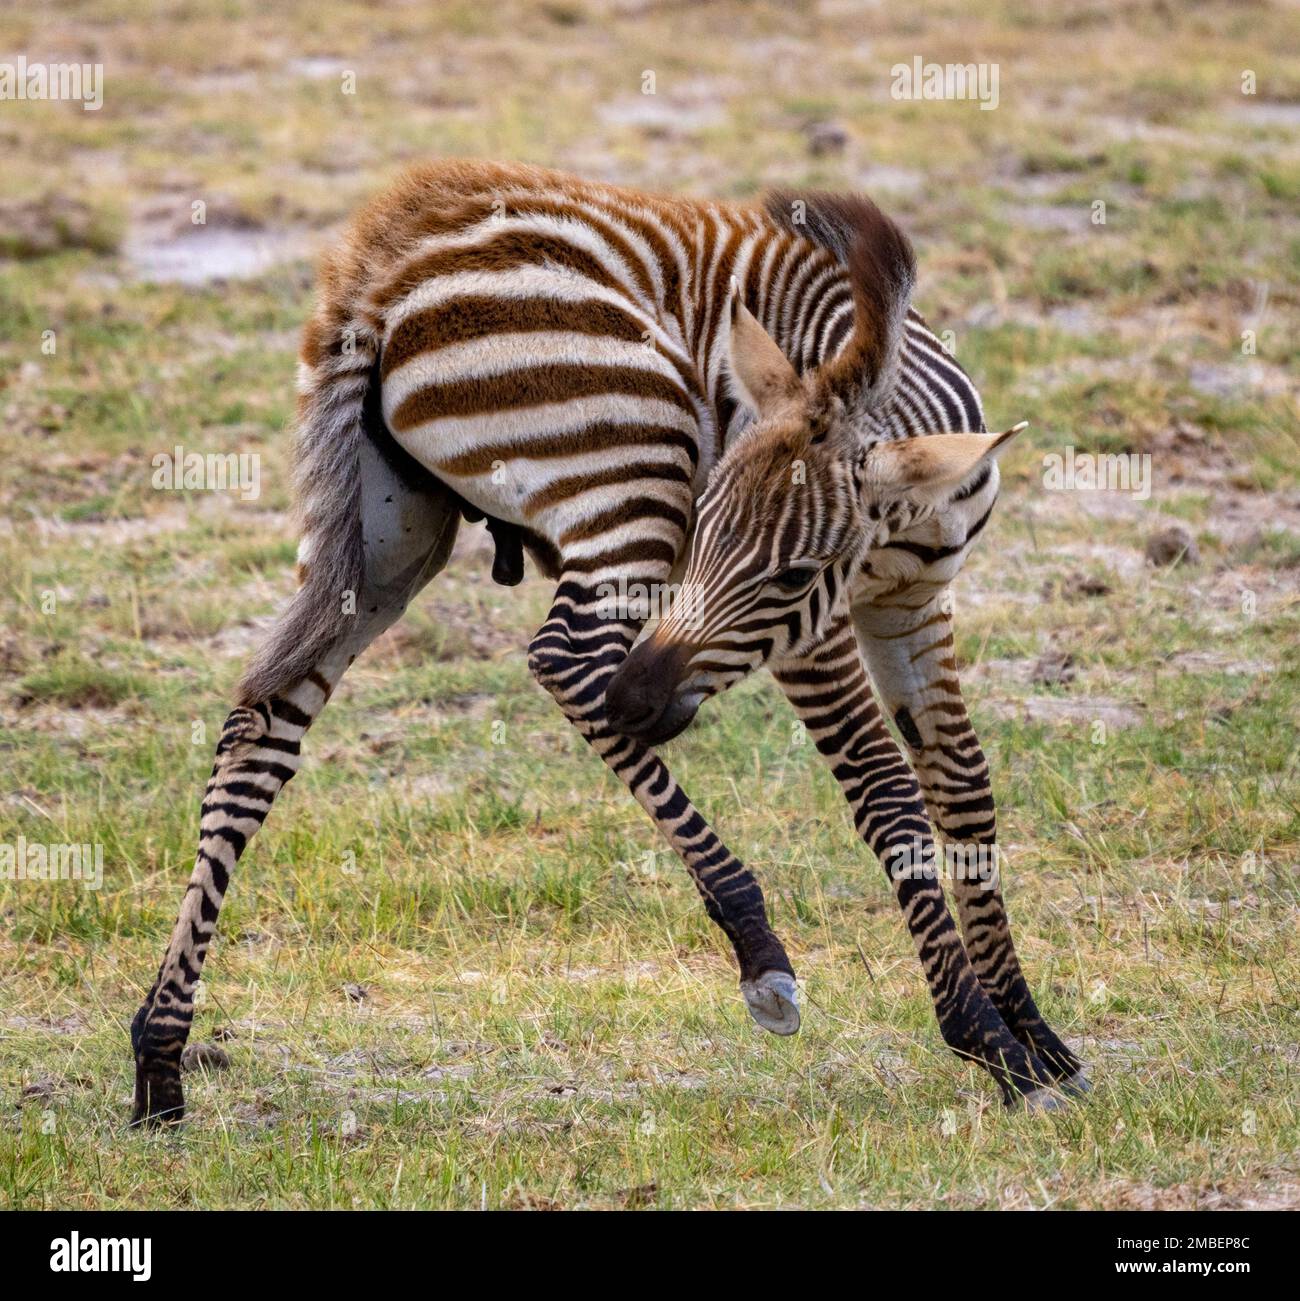 zebra gamba di mordente, Parco Nazionale di Amboseli, Kenya Foto Stock